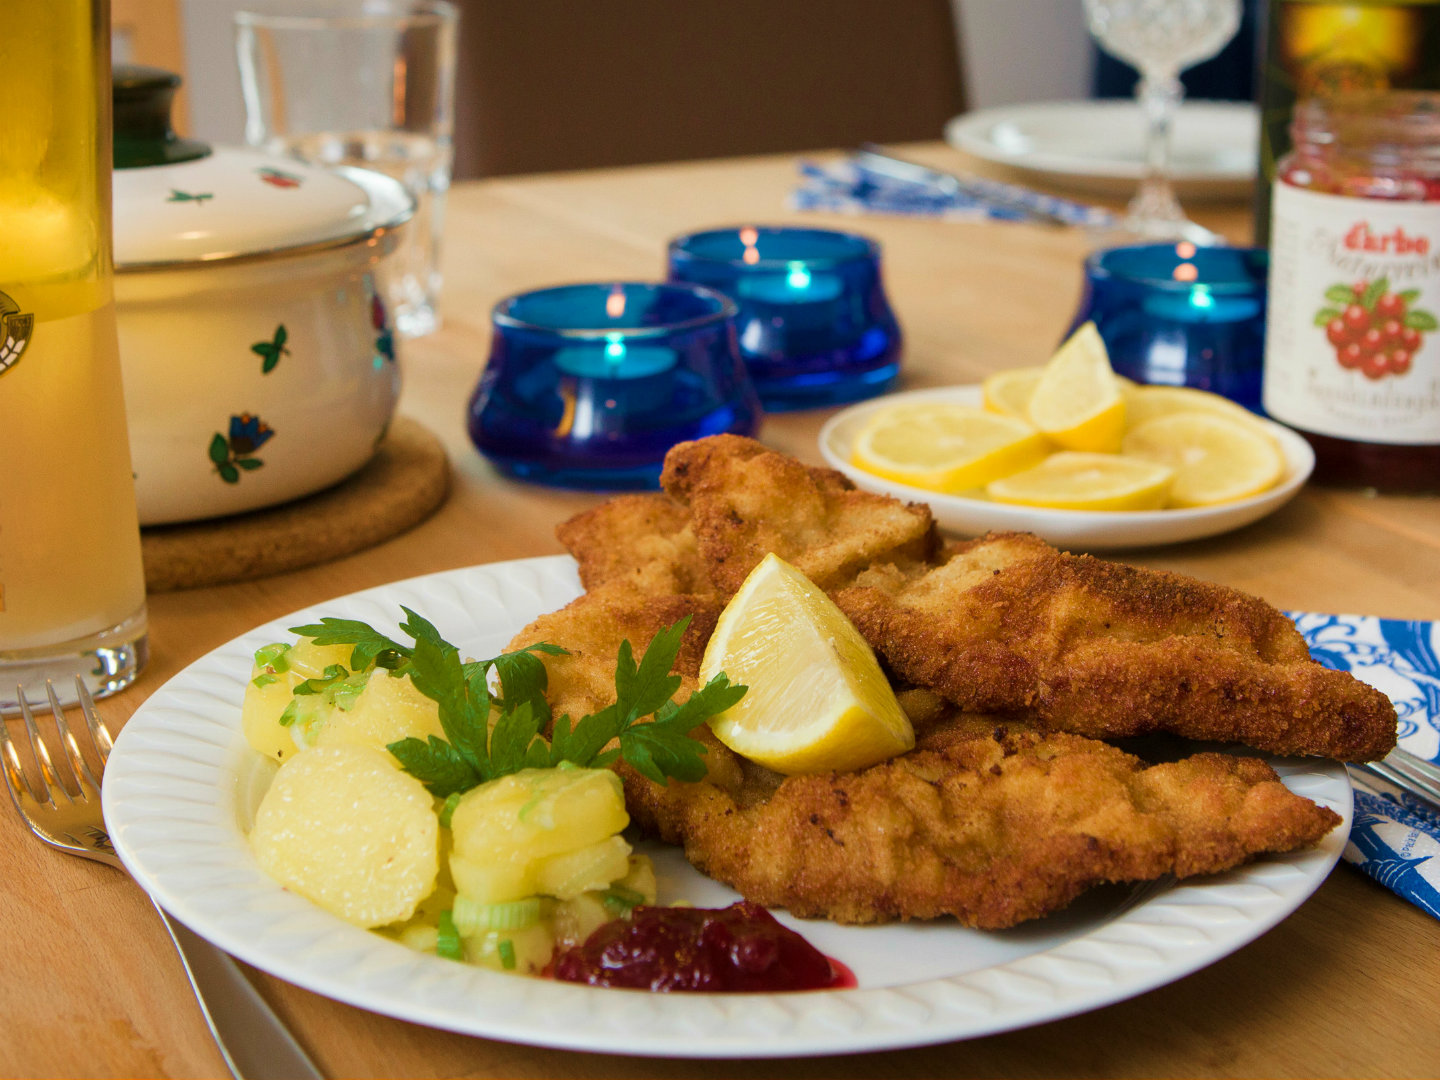 Recipe: The national dish of Austria - Wiener schnitzel